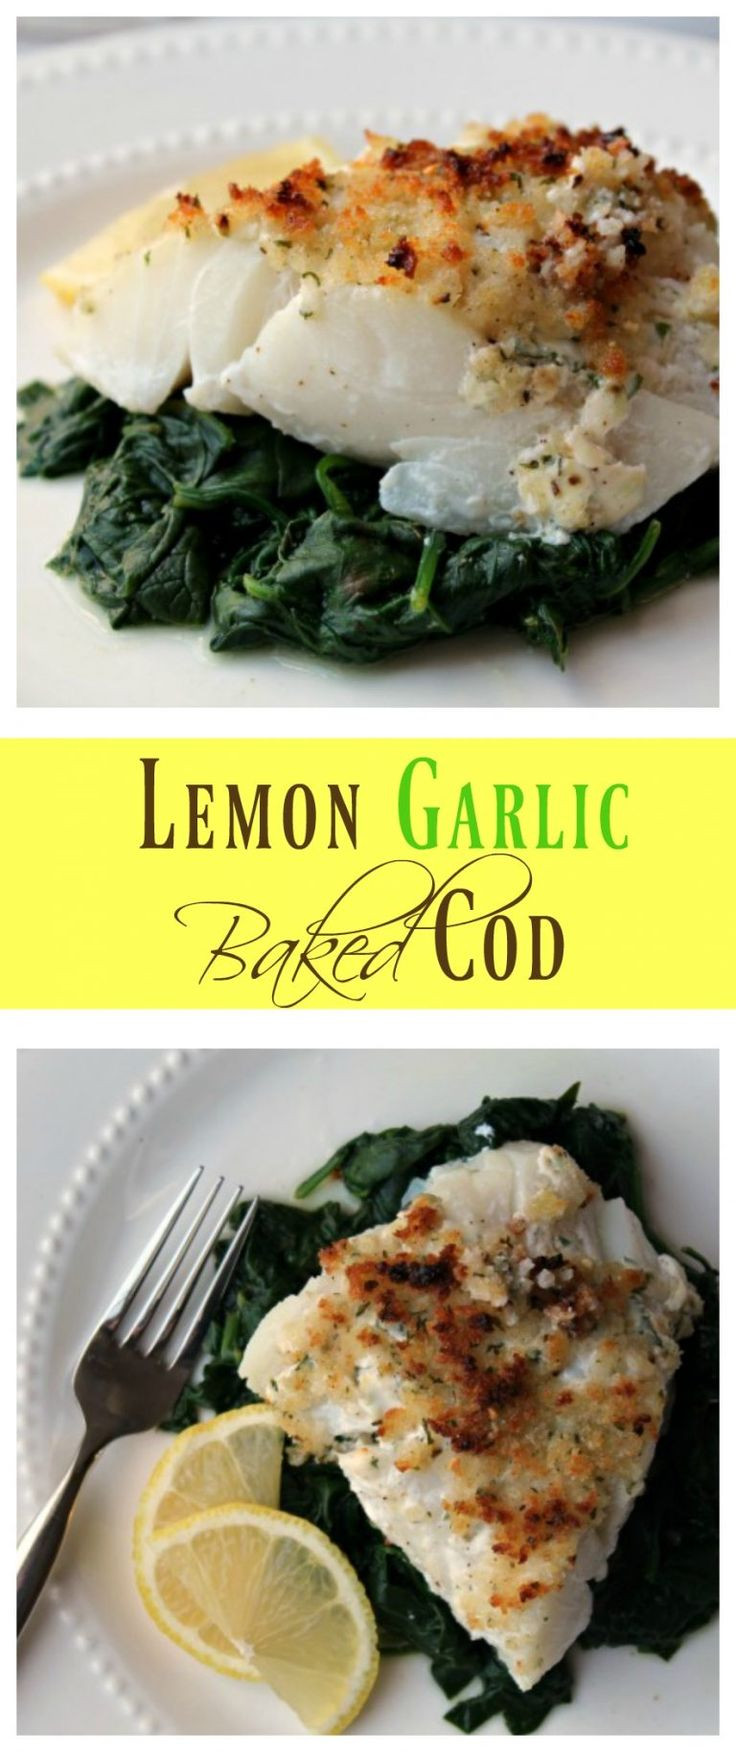 Low Fat Cod Recipes
 Lemon Garlic Baked Cod Recipe